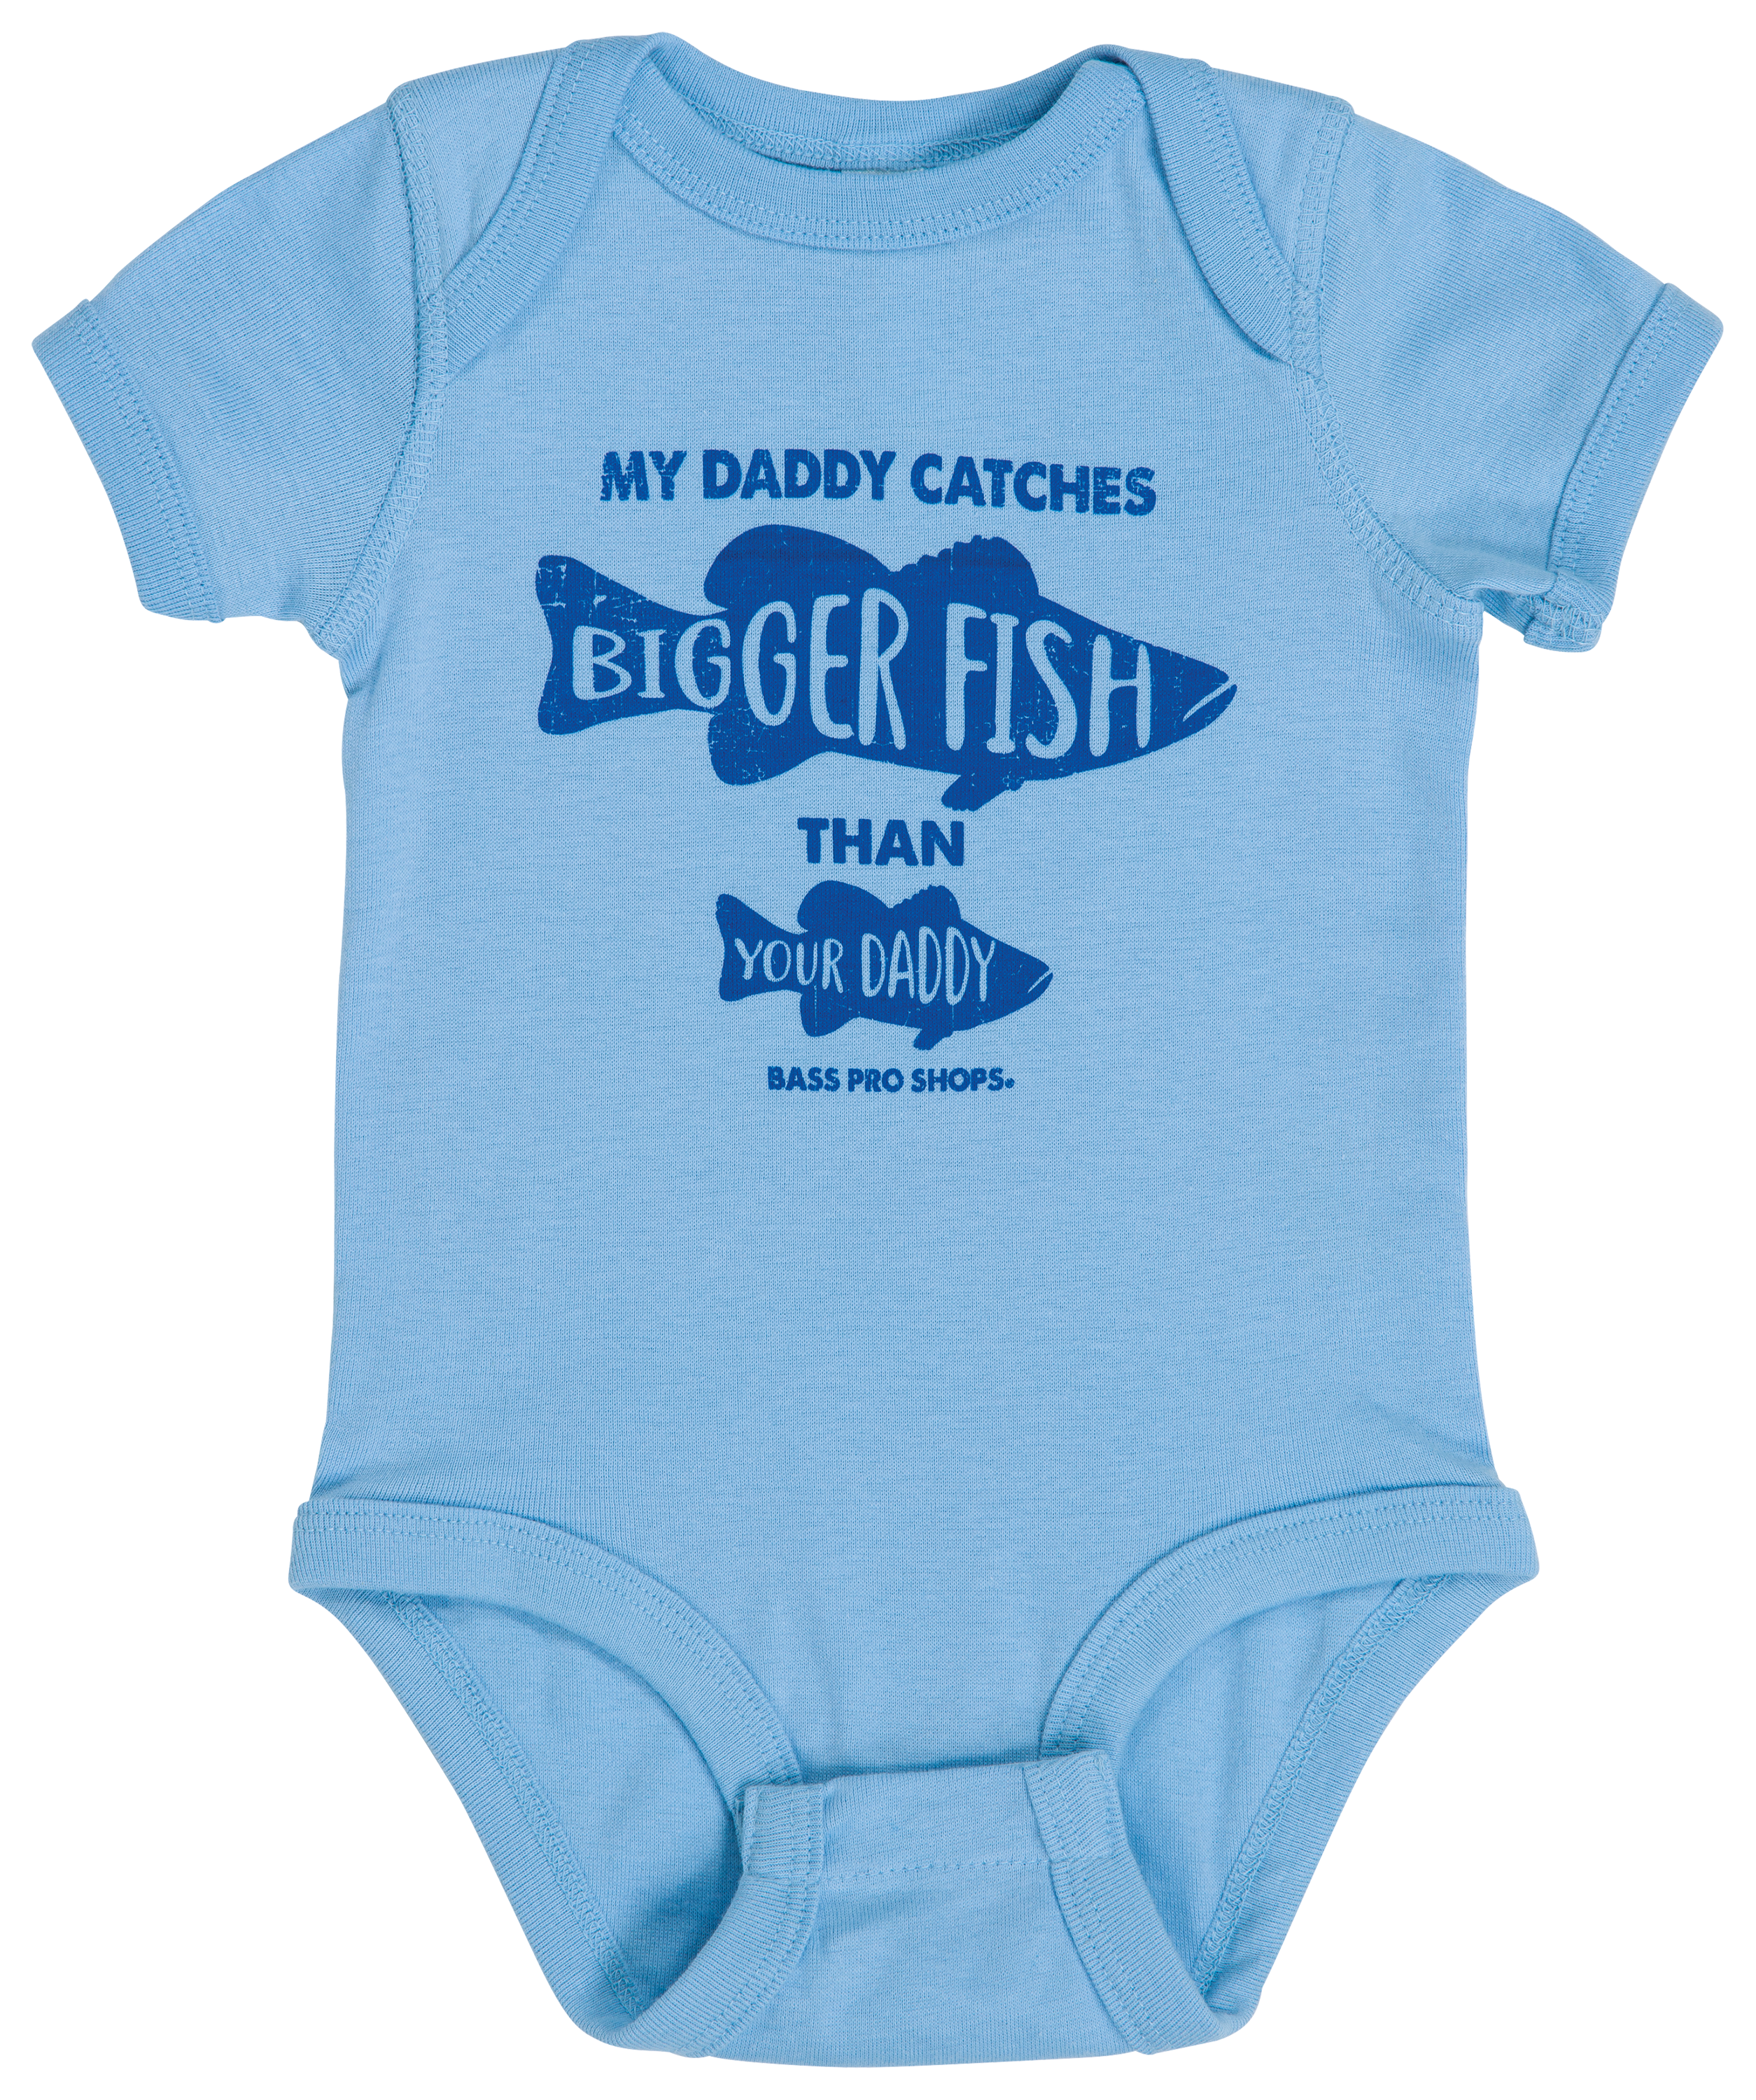 Bass Pro Shops Bigger Fish Short-Sleeve Bodysuit for Babies - Light Blue - 6 Months